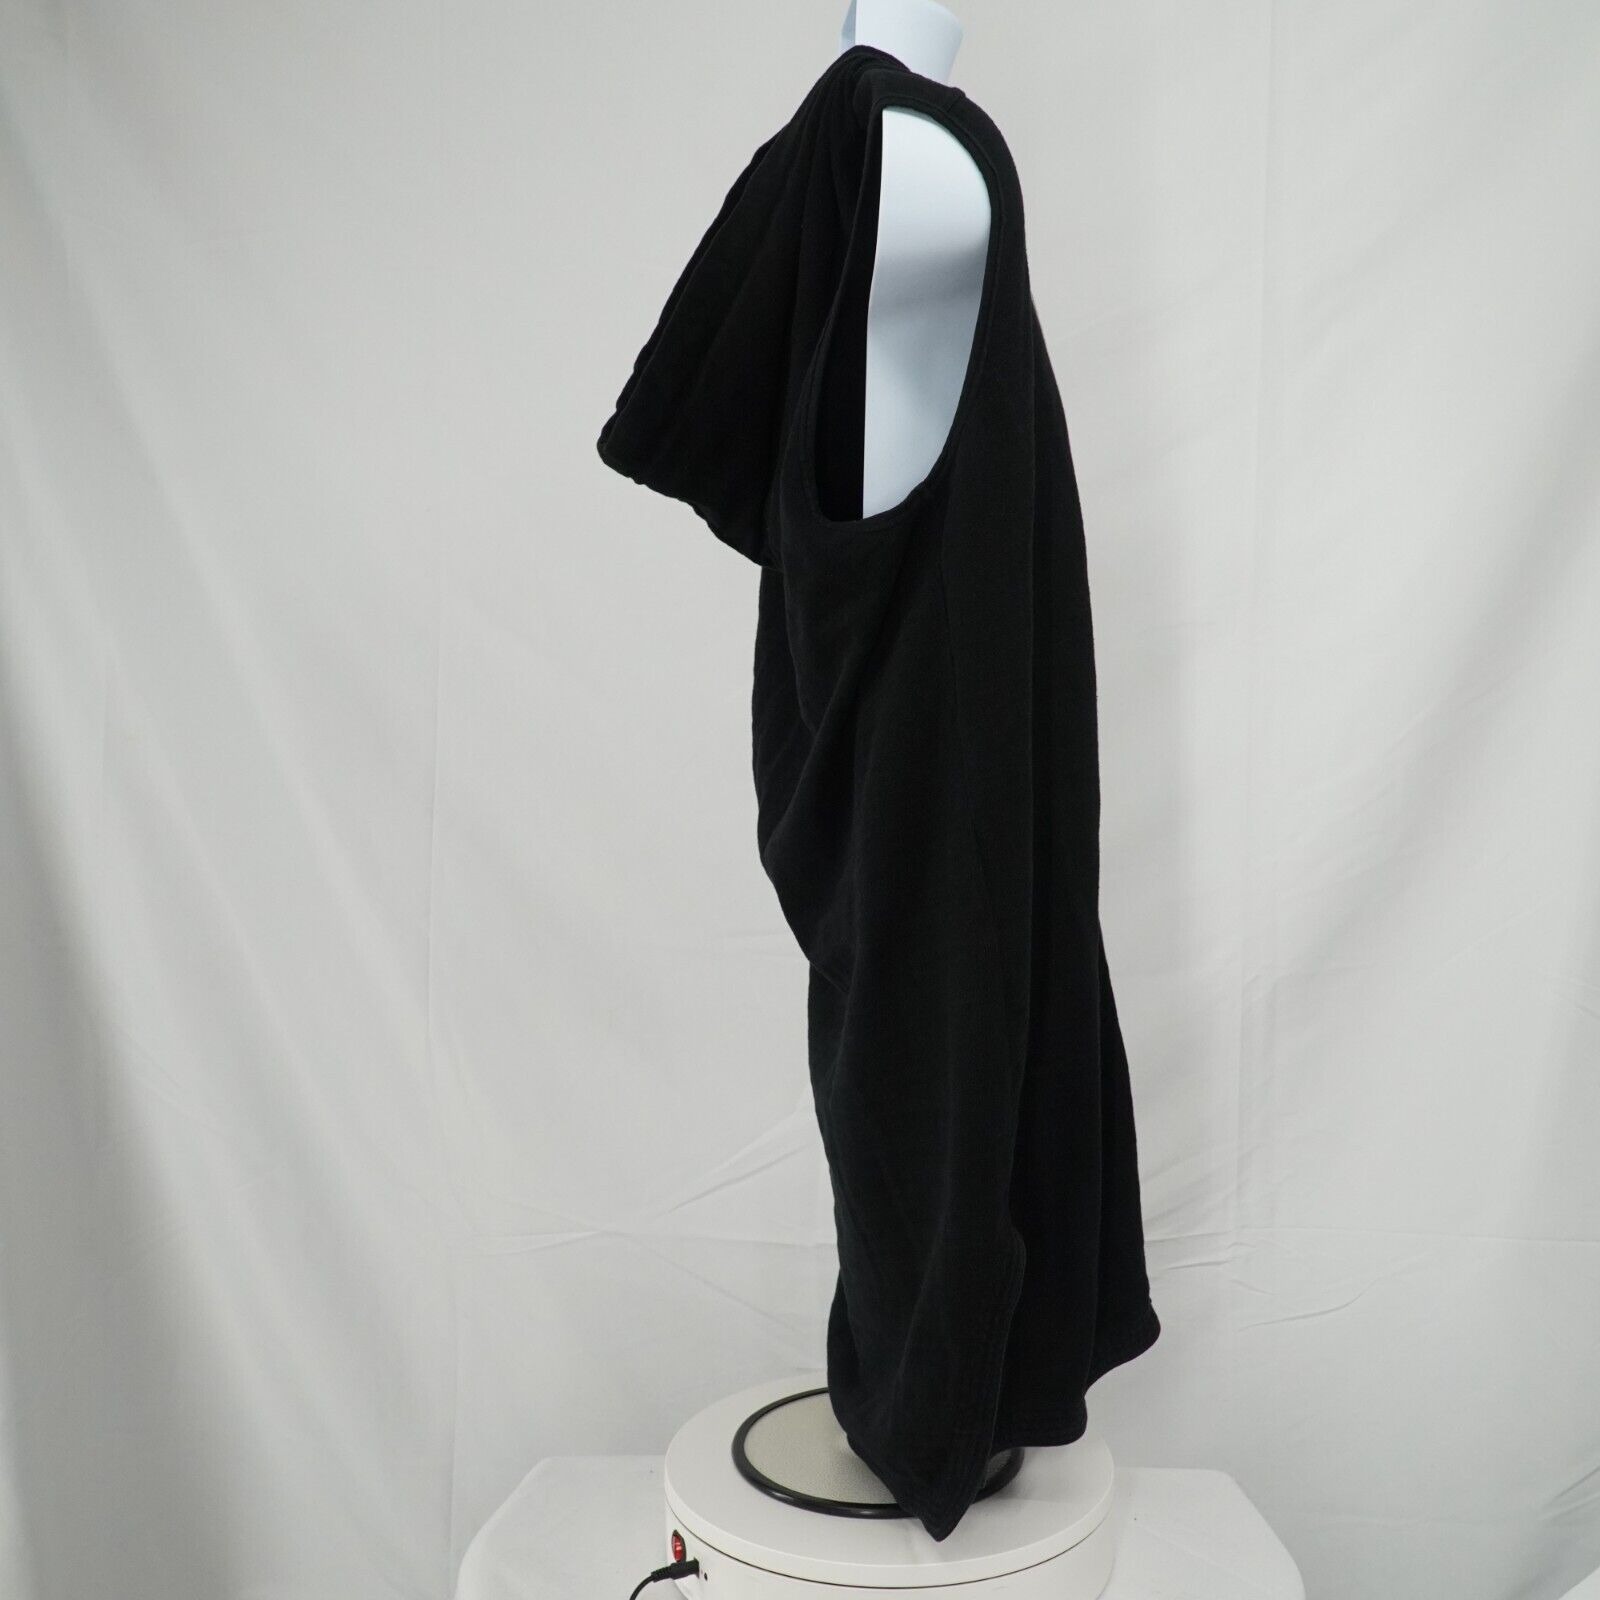 Black Zip Up Sleeveless Jacket Hoodie Cotton - Medium - 18